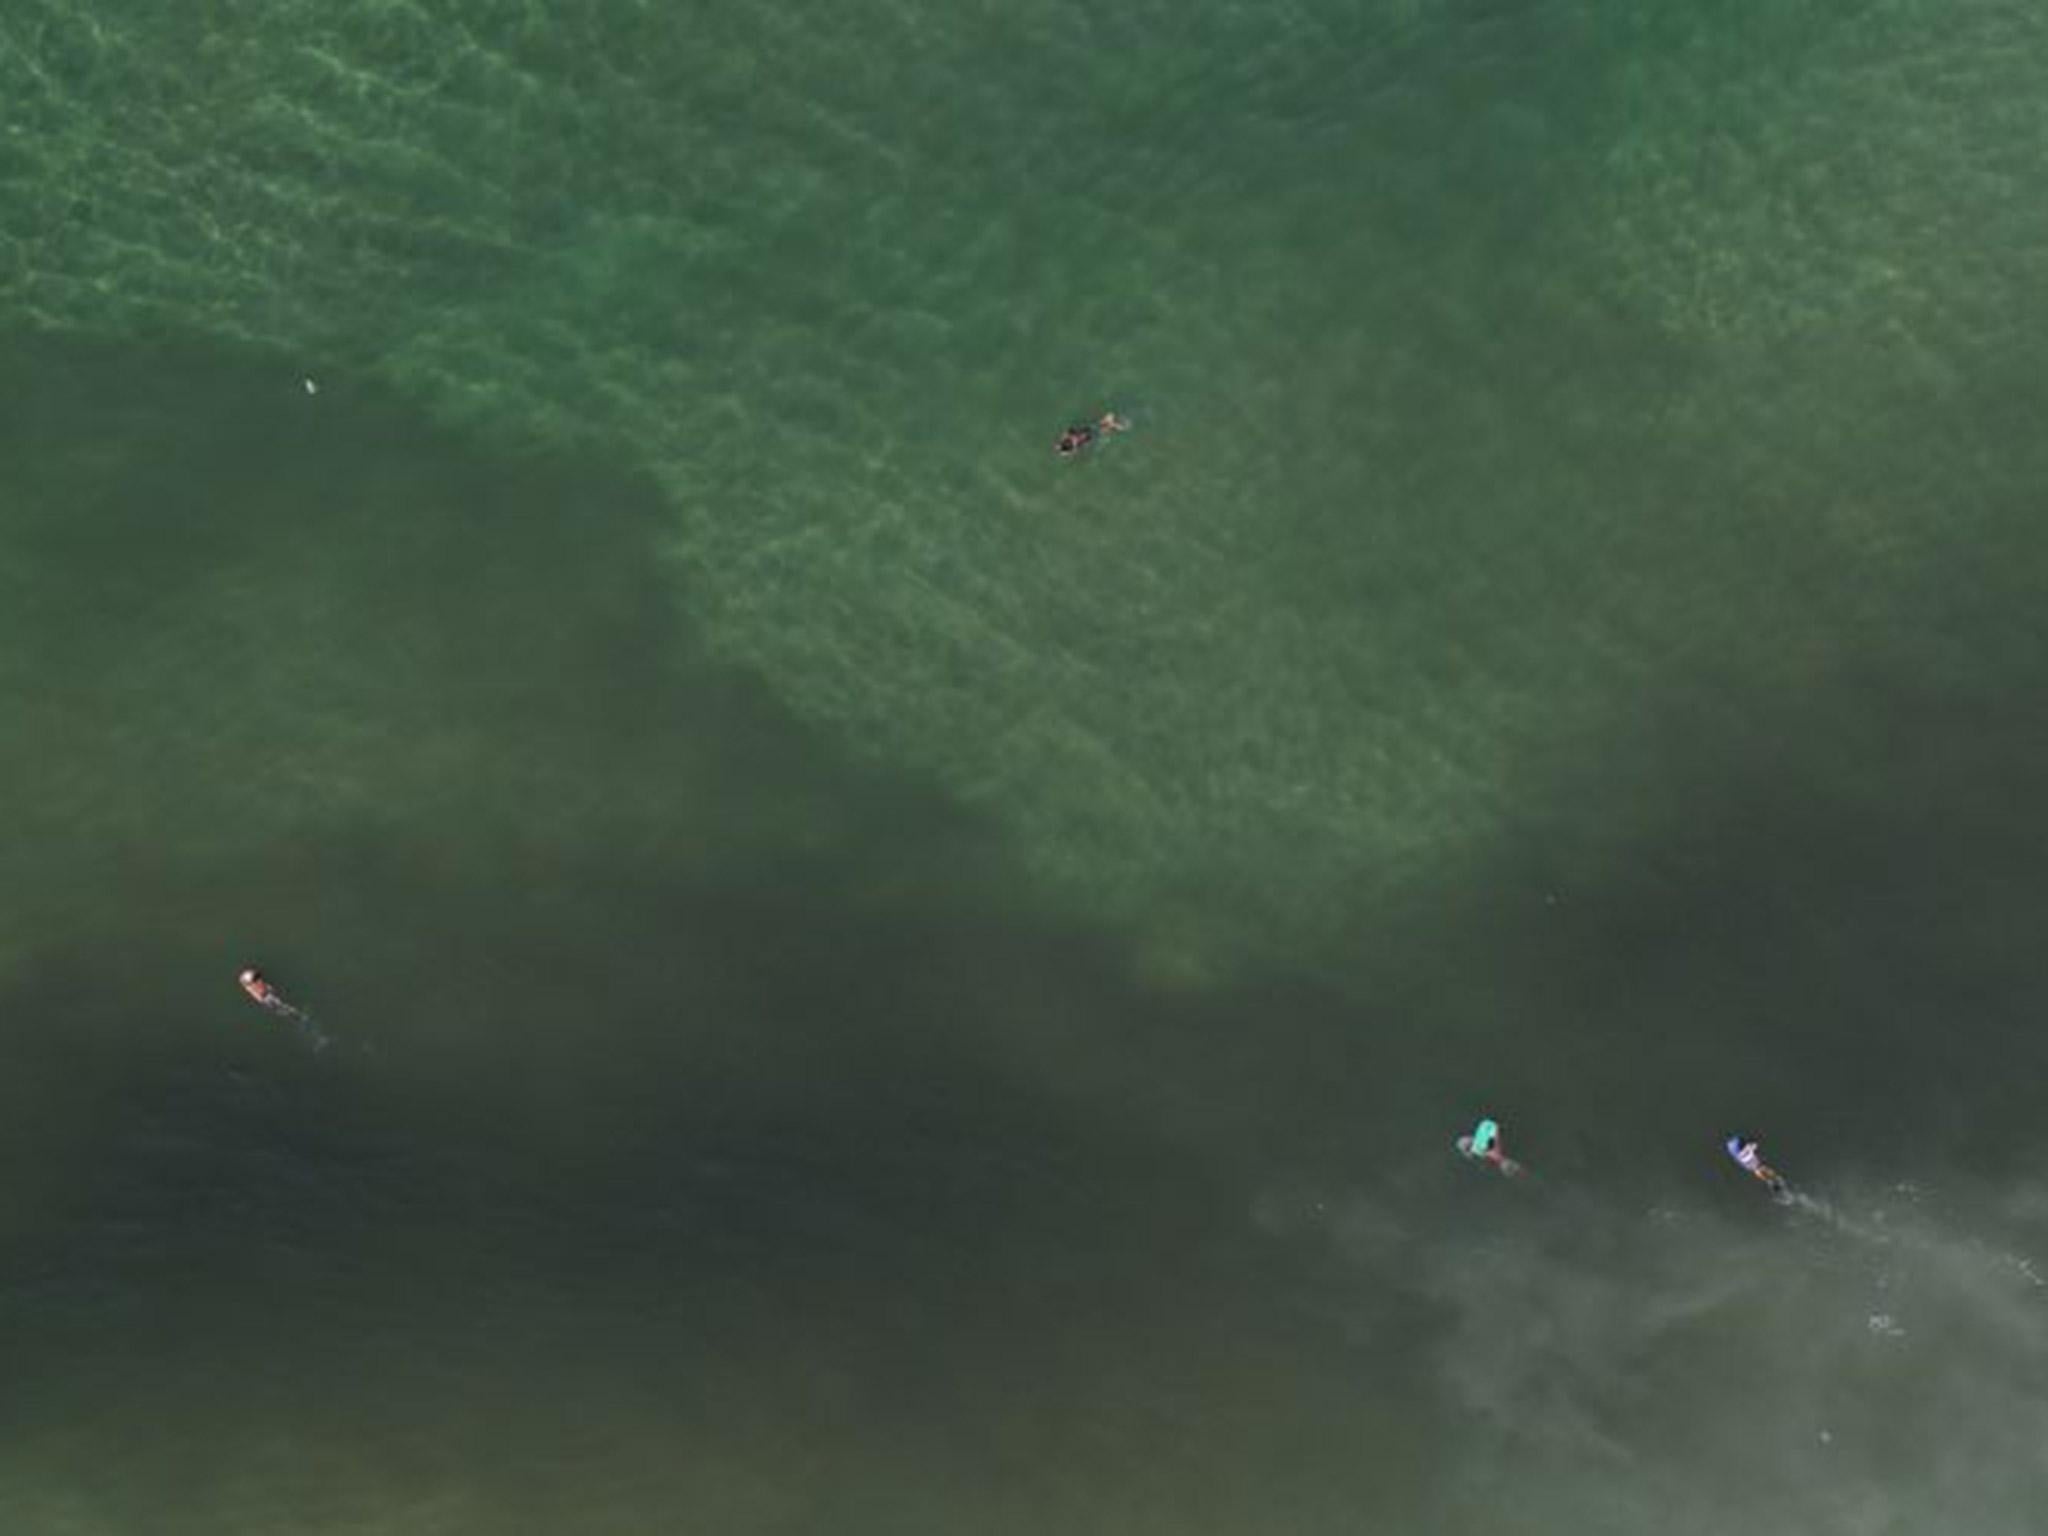 Surfers paddling into the polluted waters off Sao Conrado beach in Rio de Janeiro